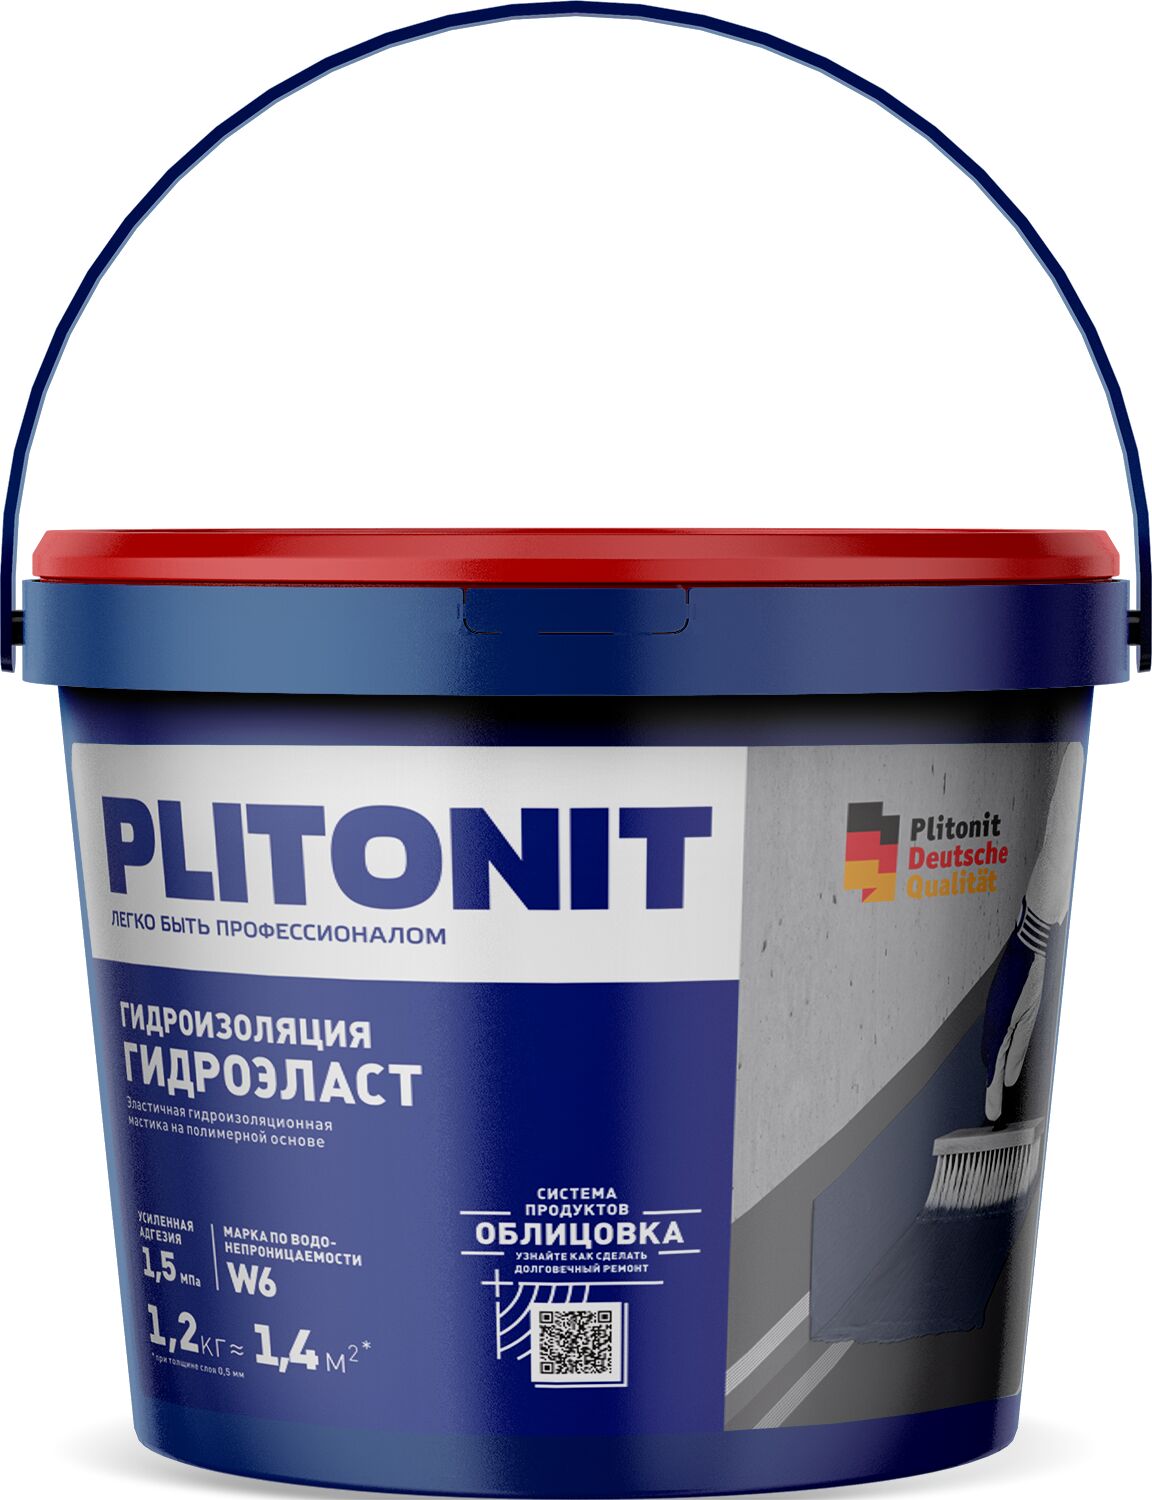 PLITONIT ГидроЭласт -1,2 эластичная гидроизоляционная мастика